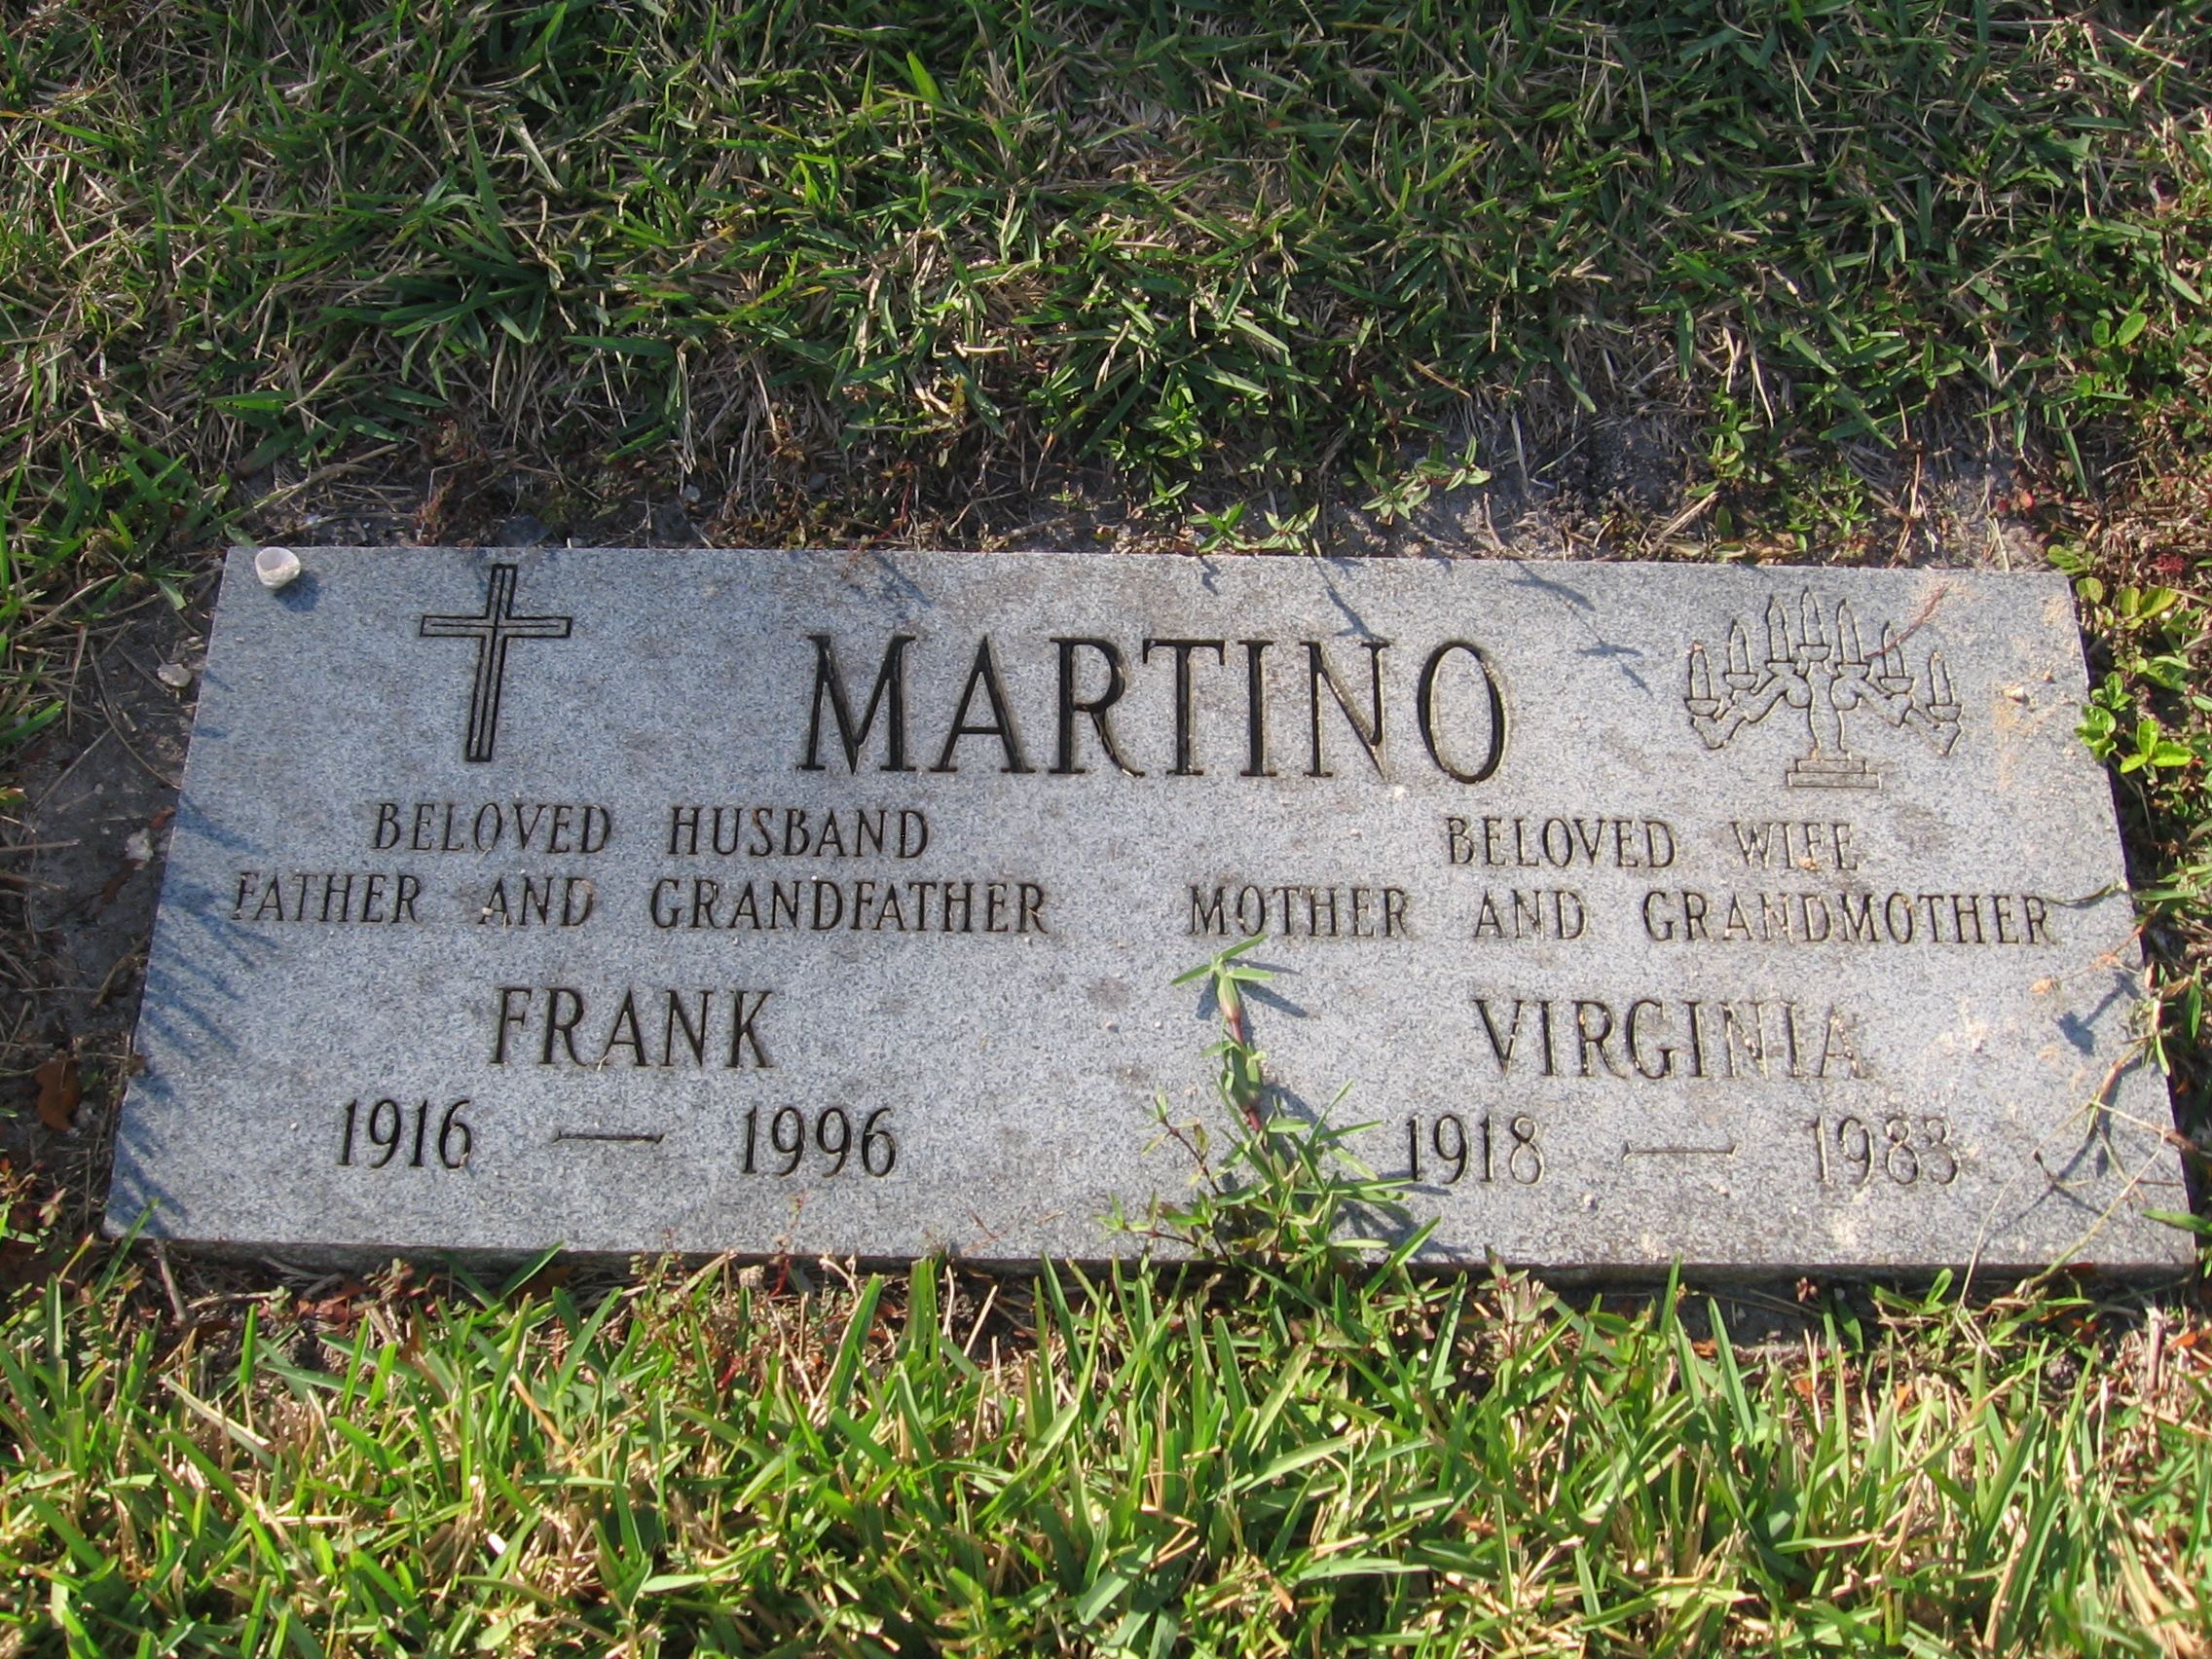 Frank Martino